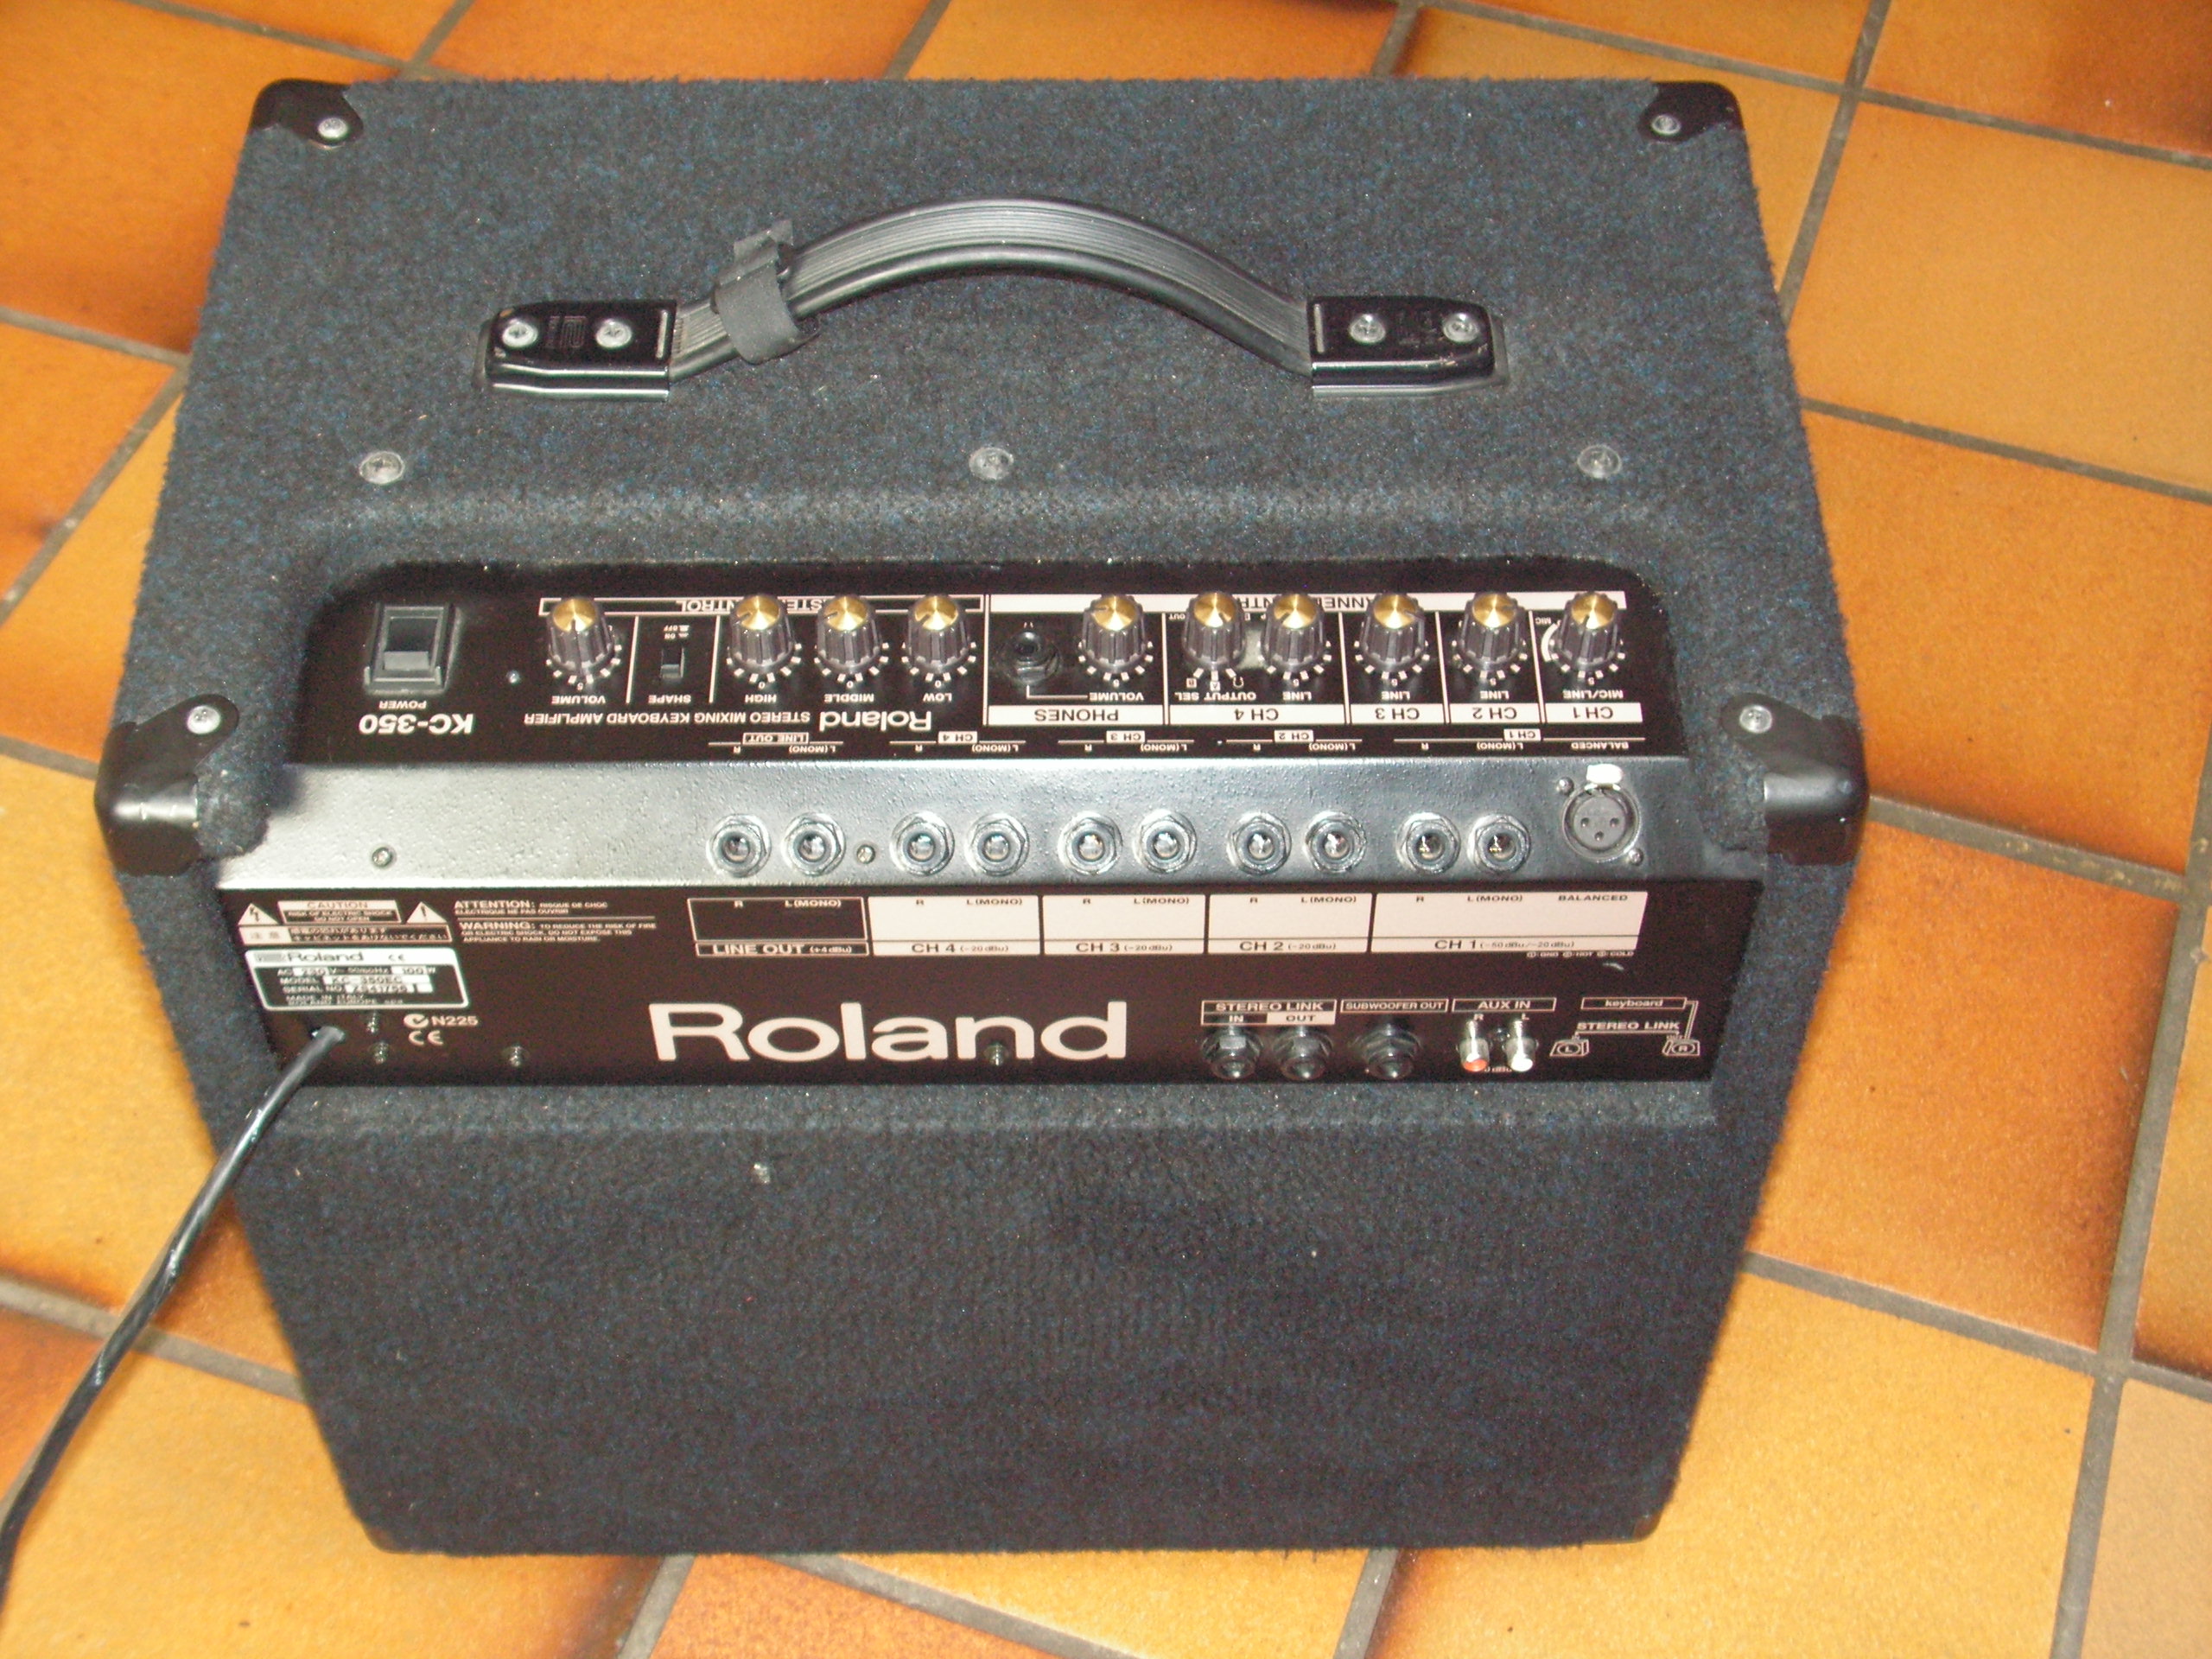 Roland KC-350 image (#454274) - Audiofanzine